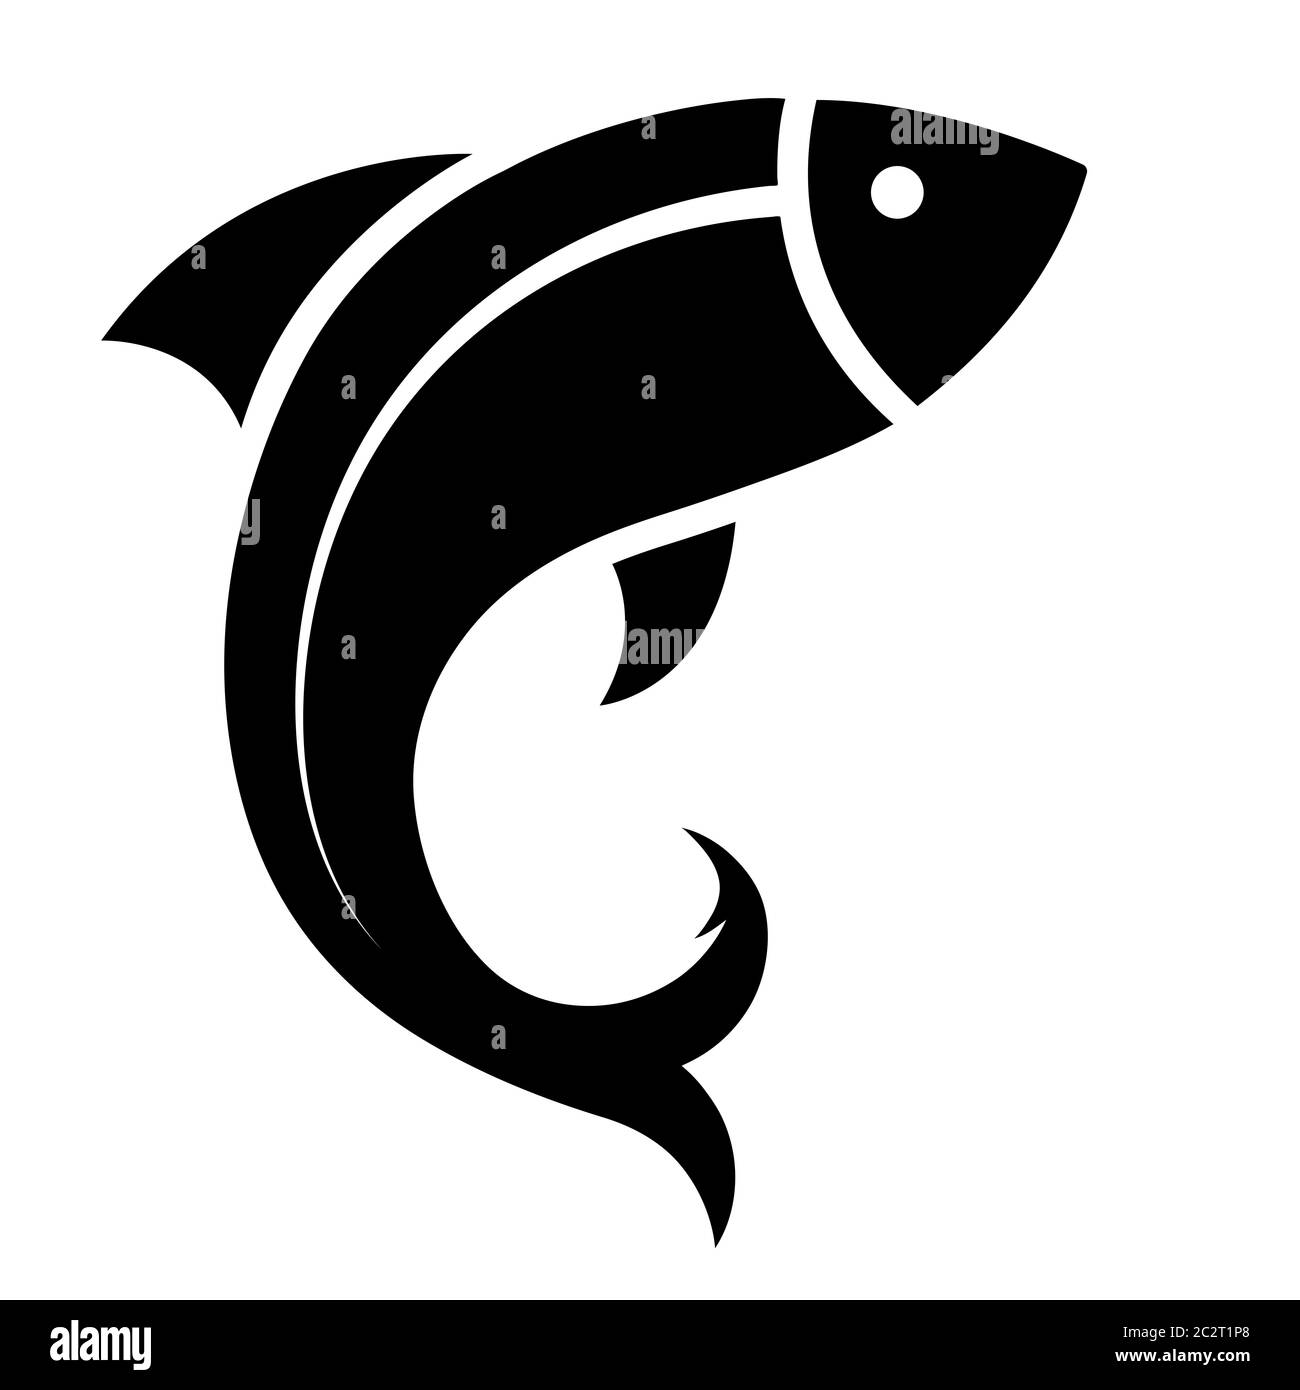 Fish icon black silhouette. Fisheries logo symbol. Stock Photo